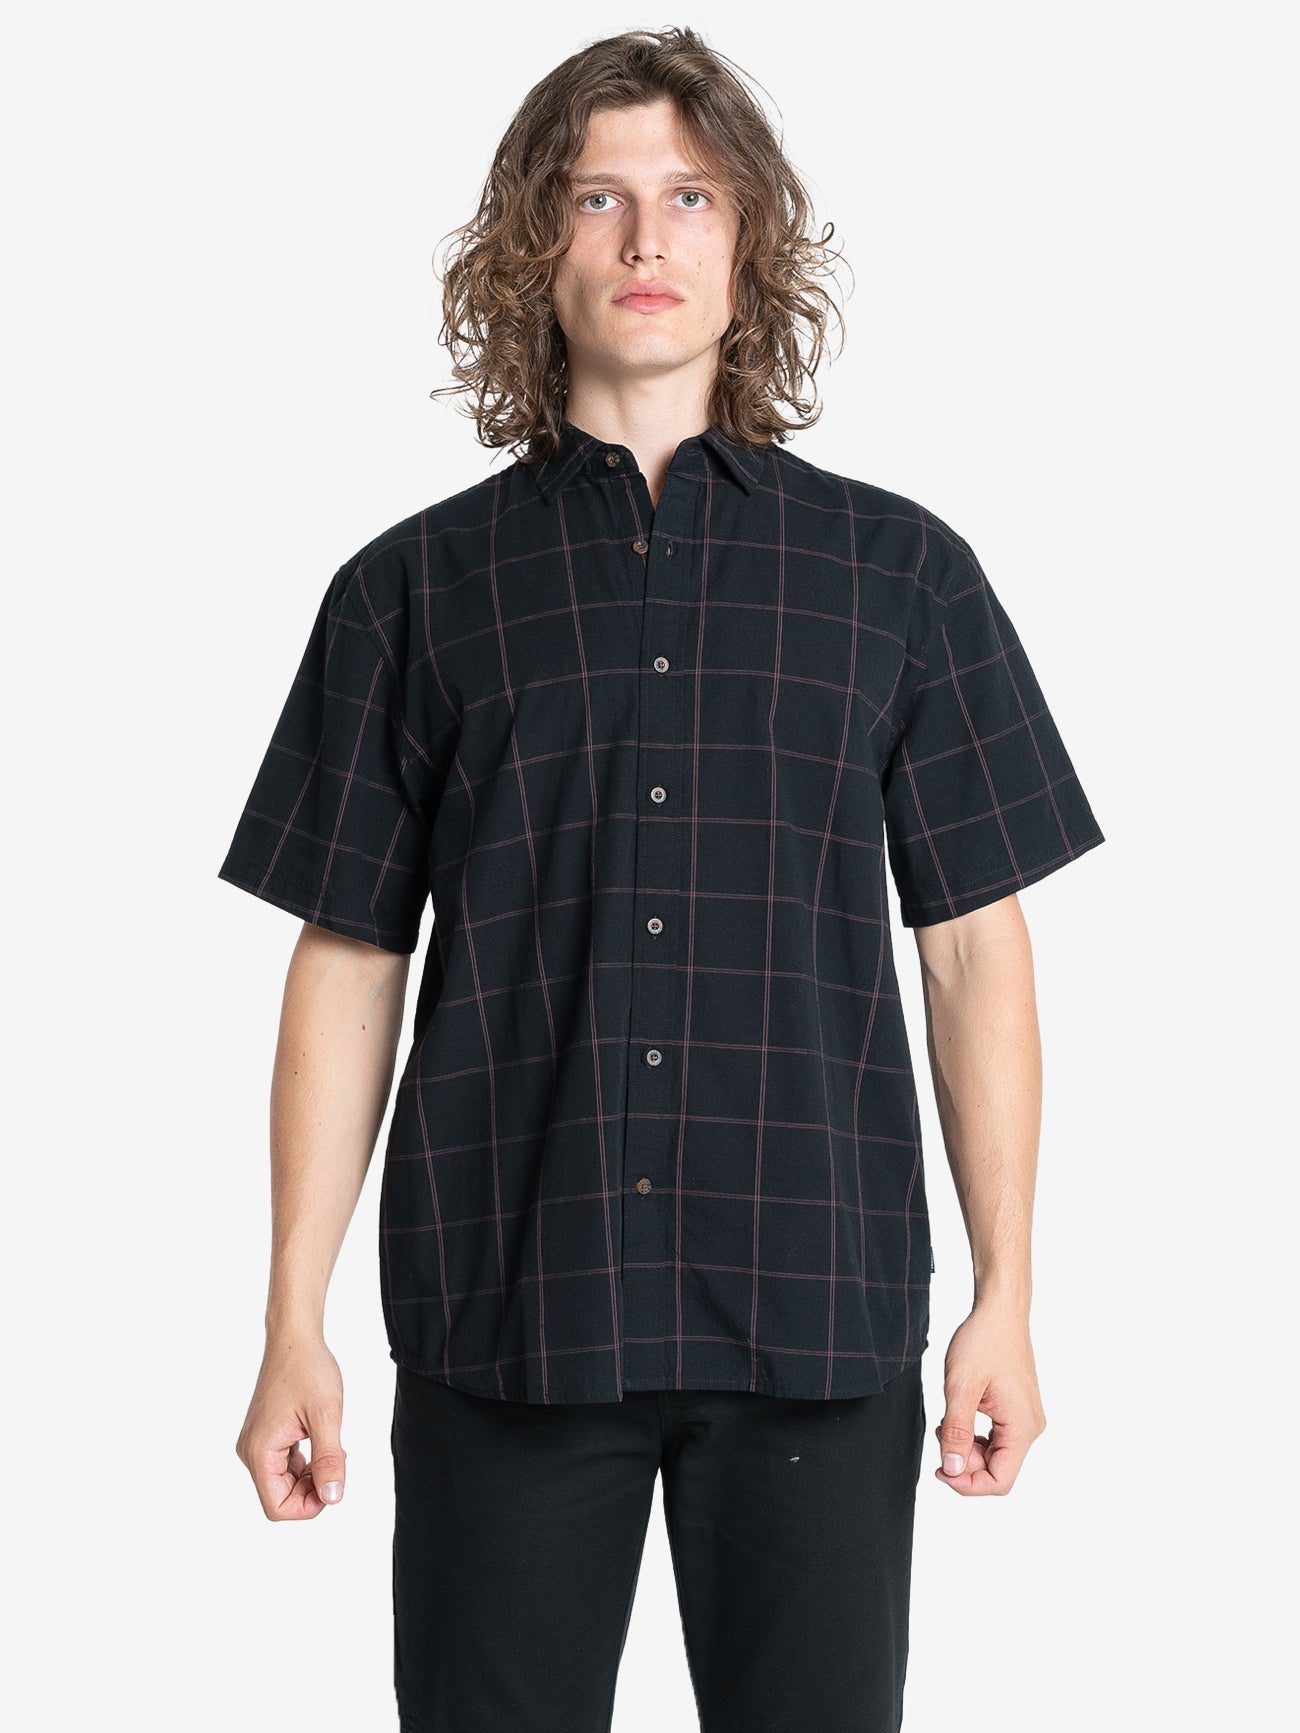 Higher Magic Short Sleeve Shirt - Black XS